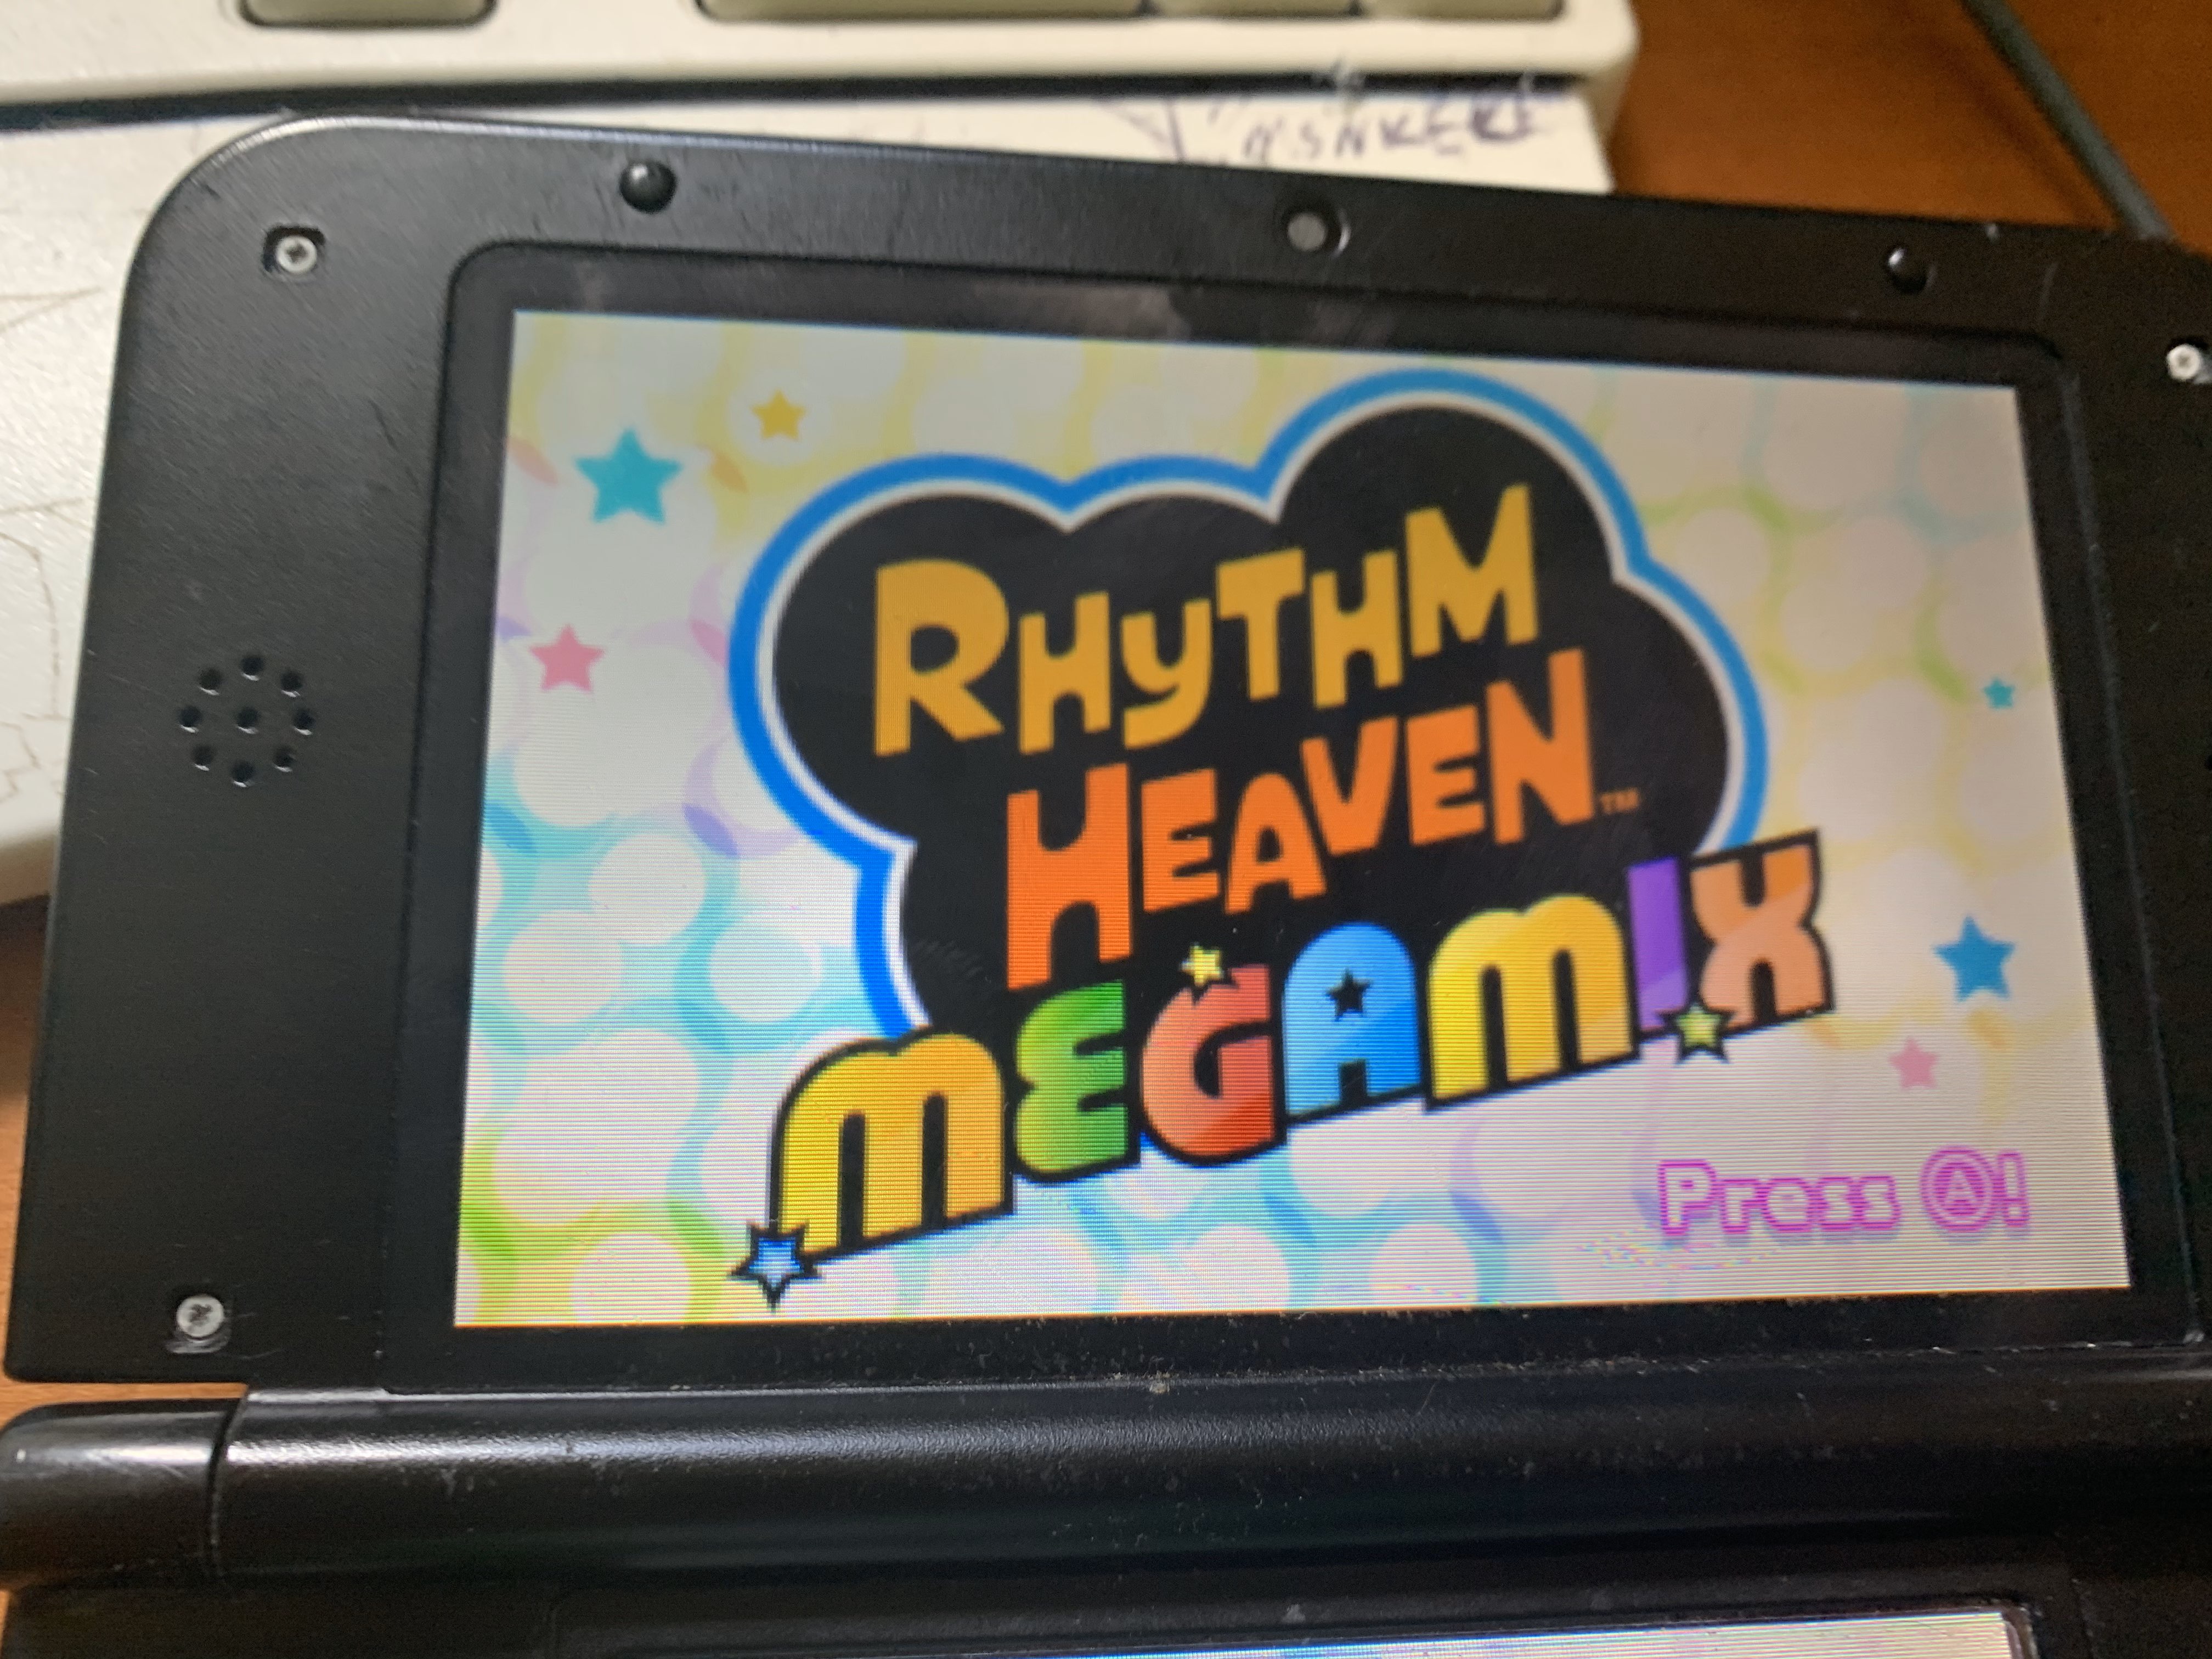 rhythm heaven megamix emulator